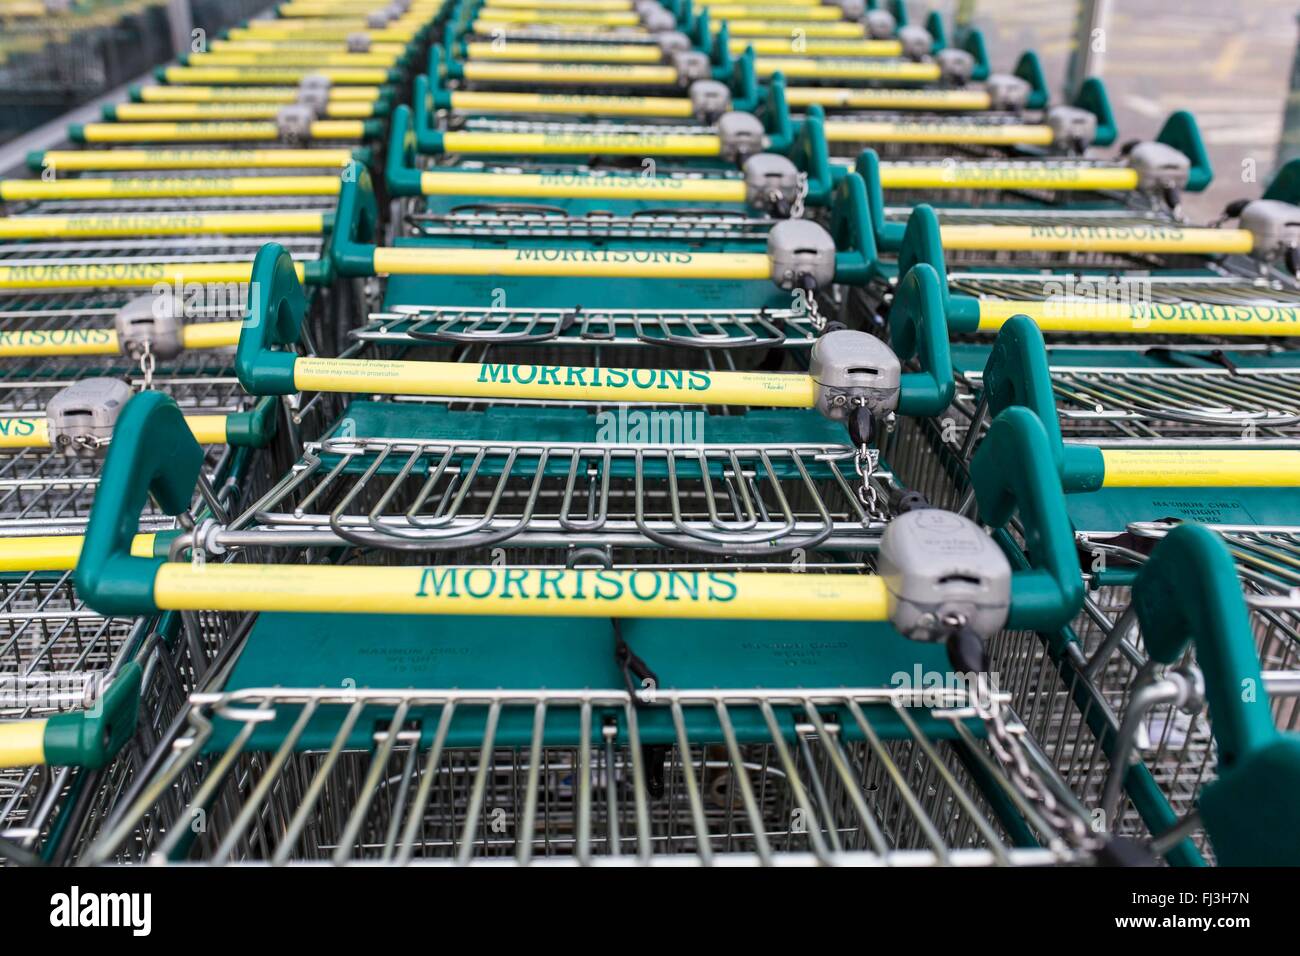 Carritos de supermercado Morrison Foto de stock